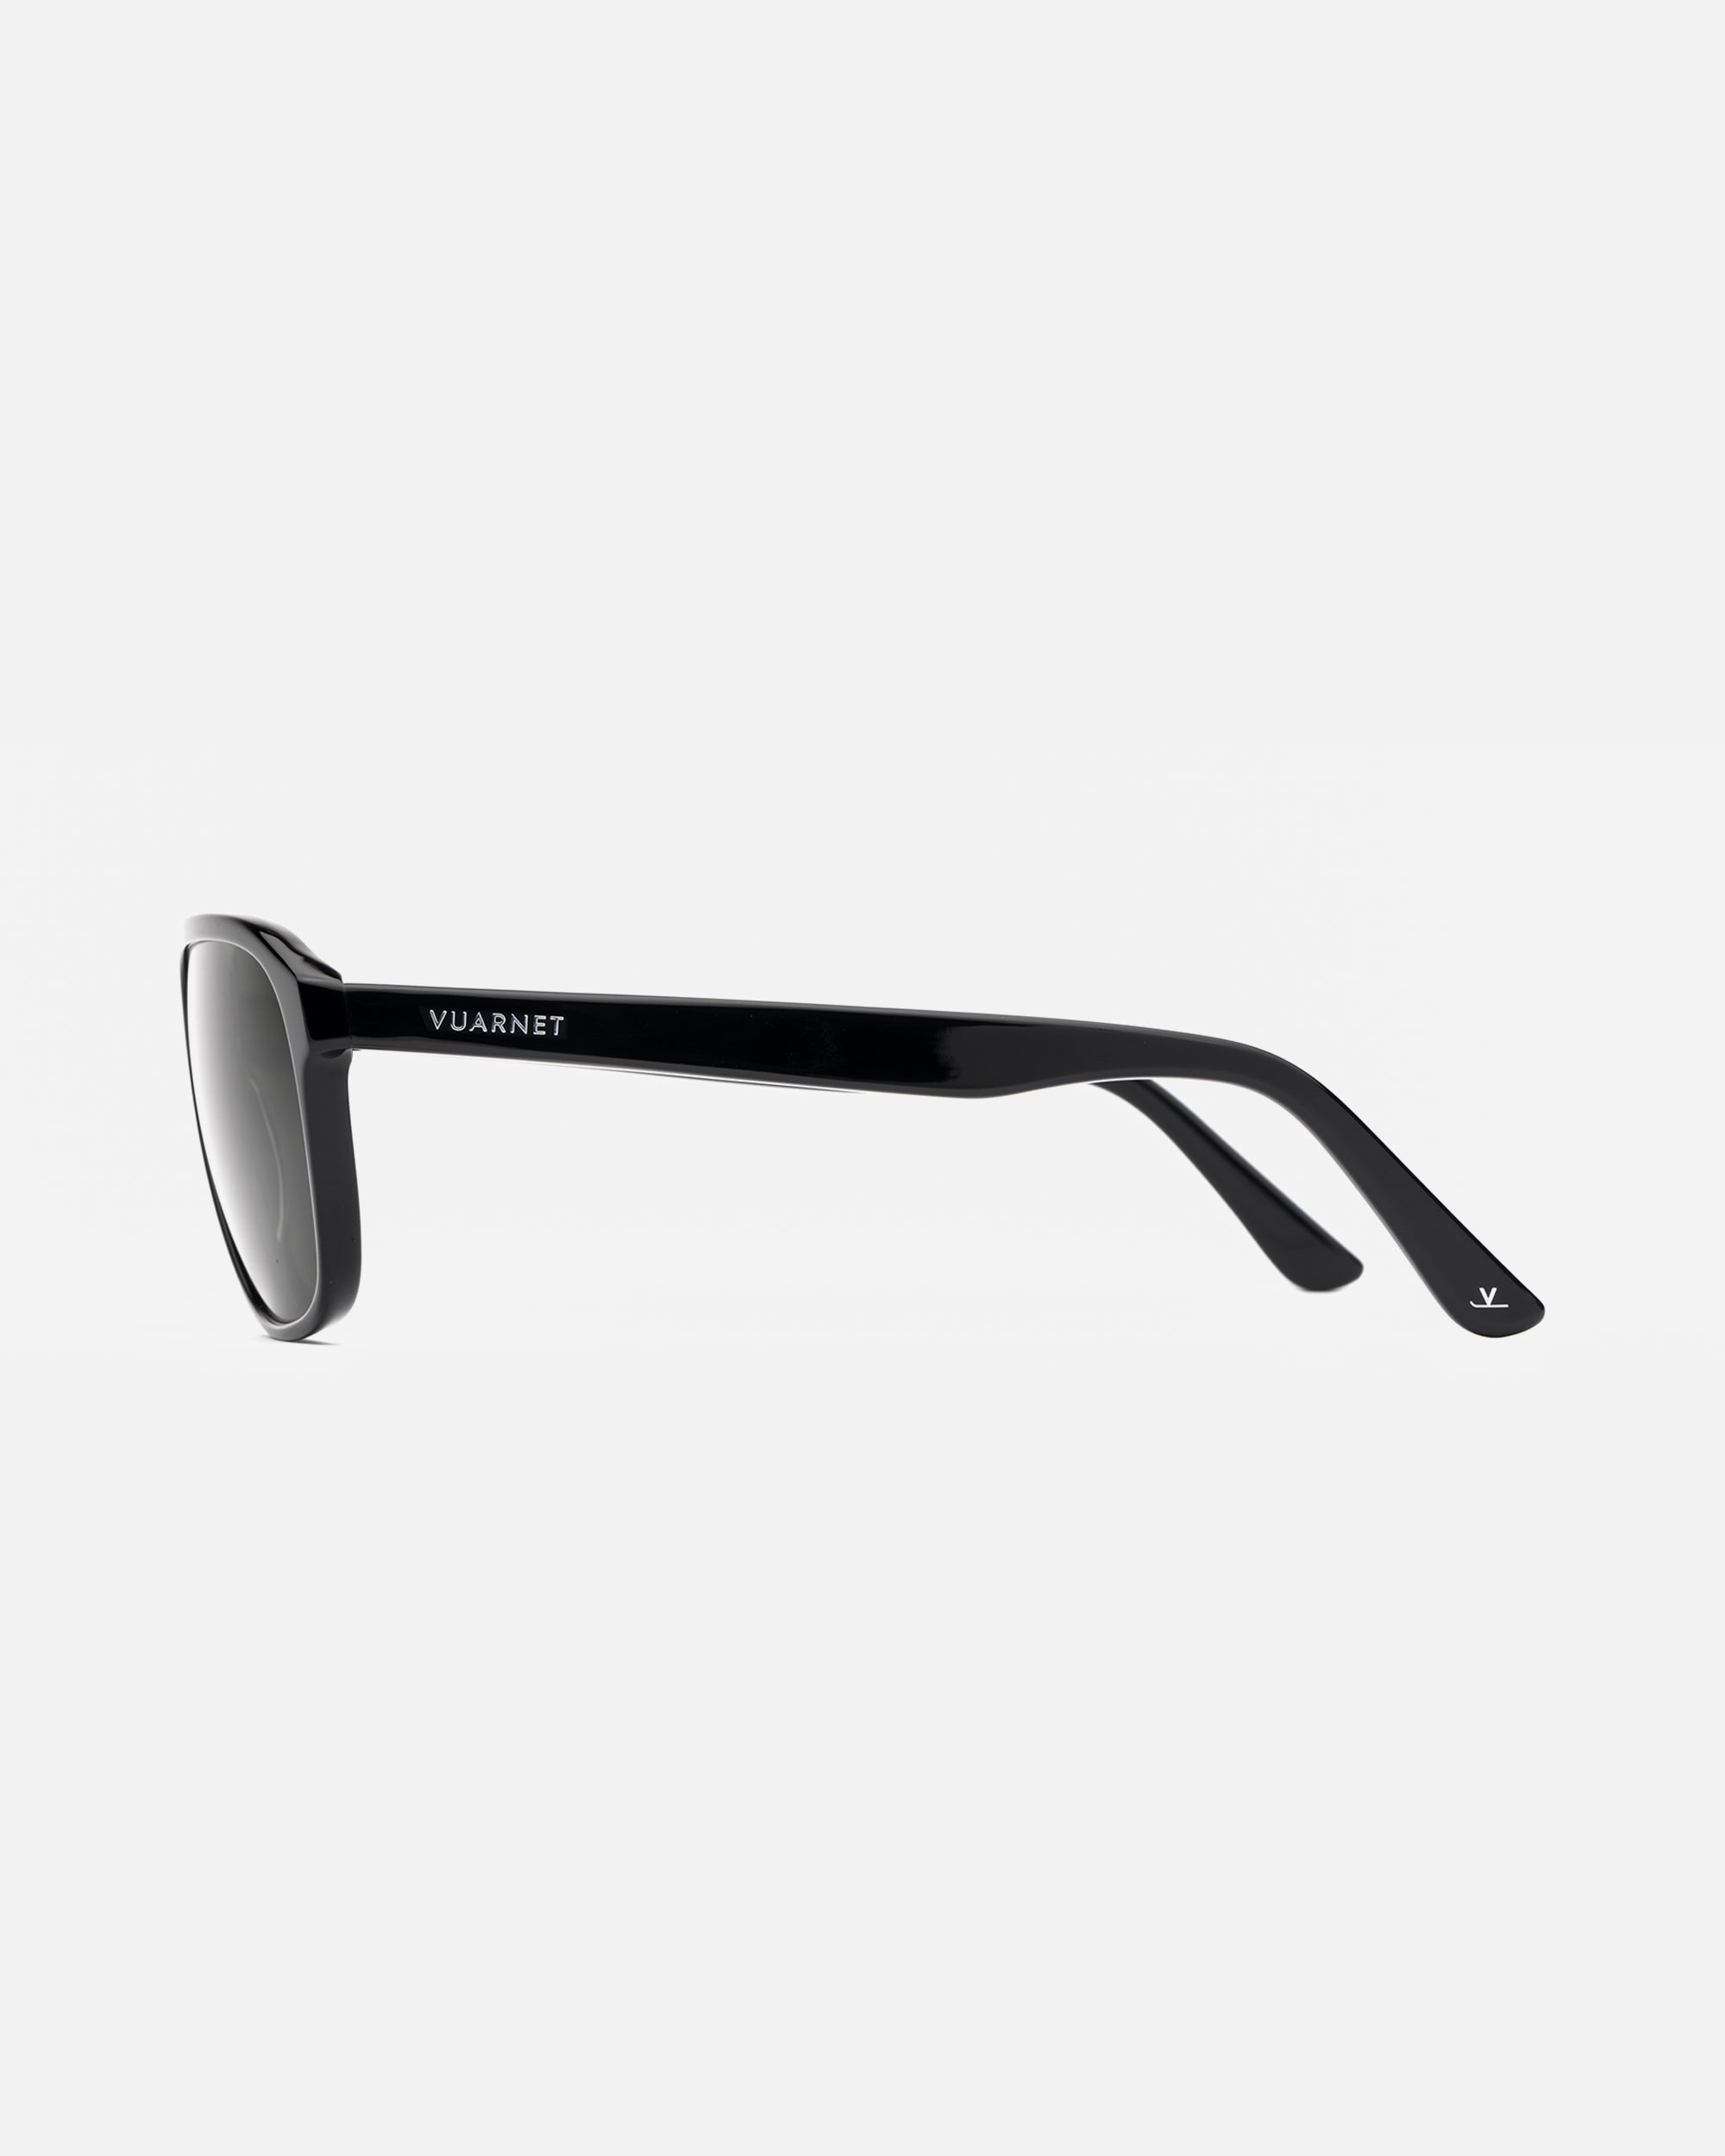 Vuarnet LEGEND 03 VALLEY Black - Lifestyle Sunglasses